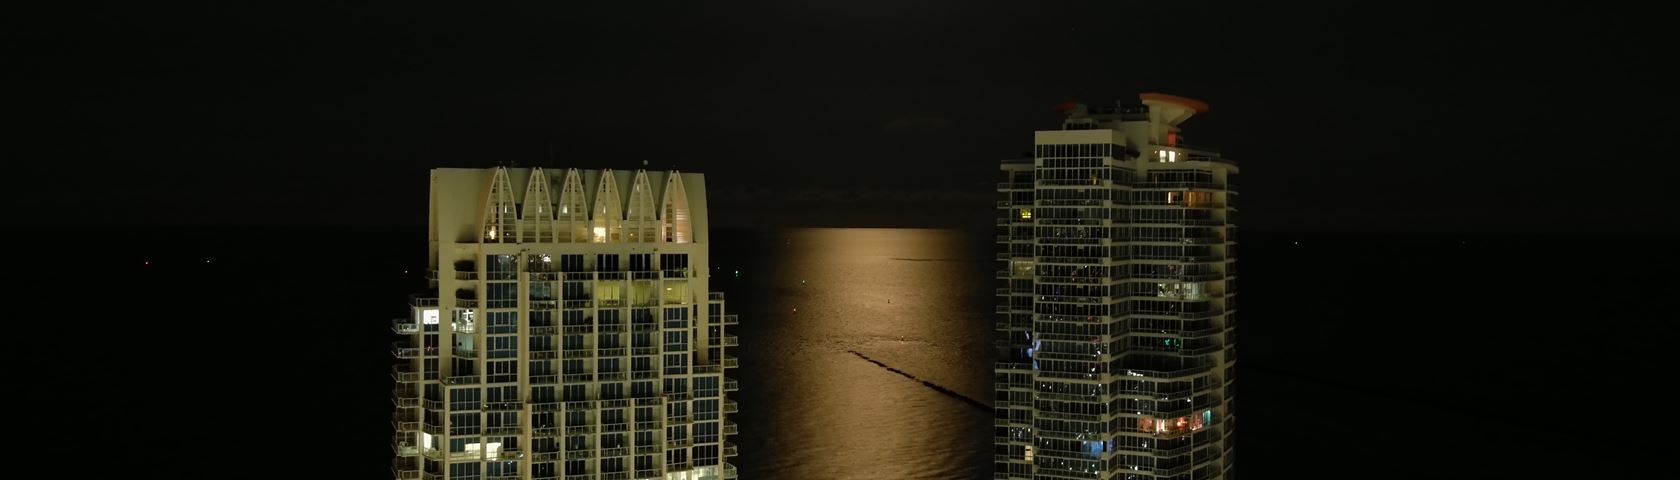 Eclipse Moon in South Beach Miami